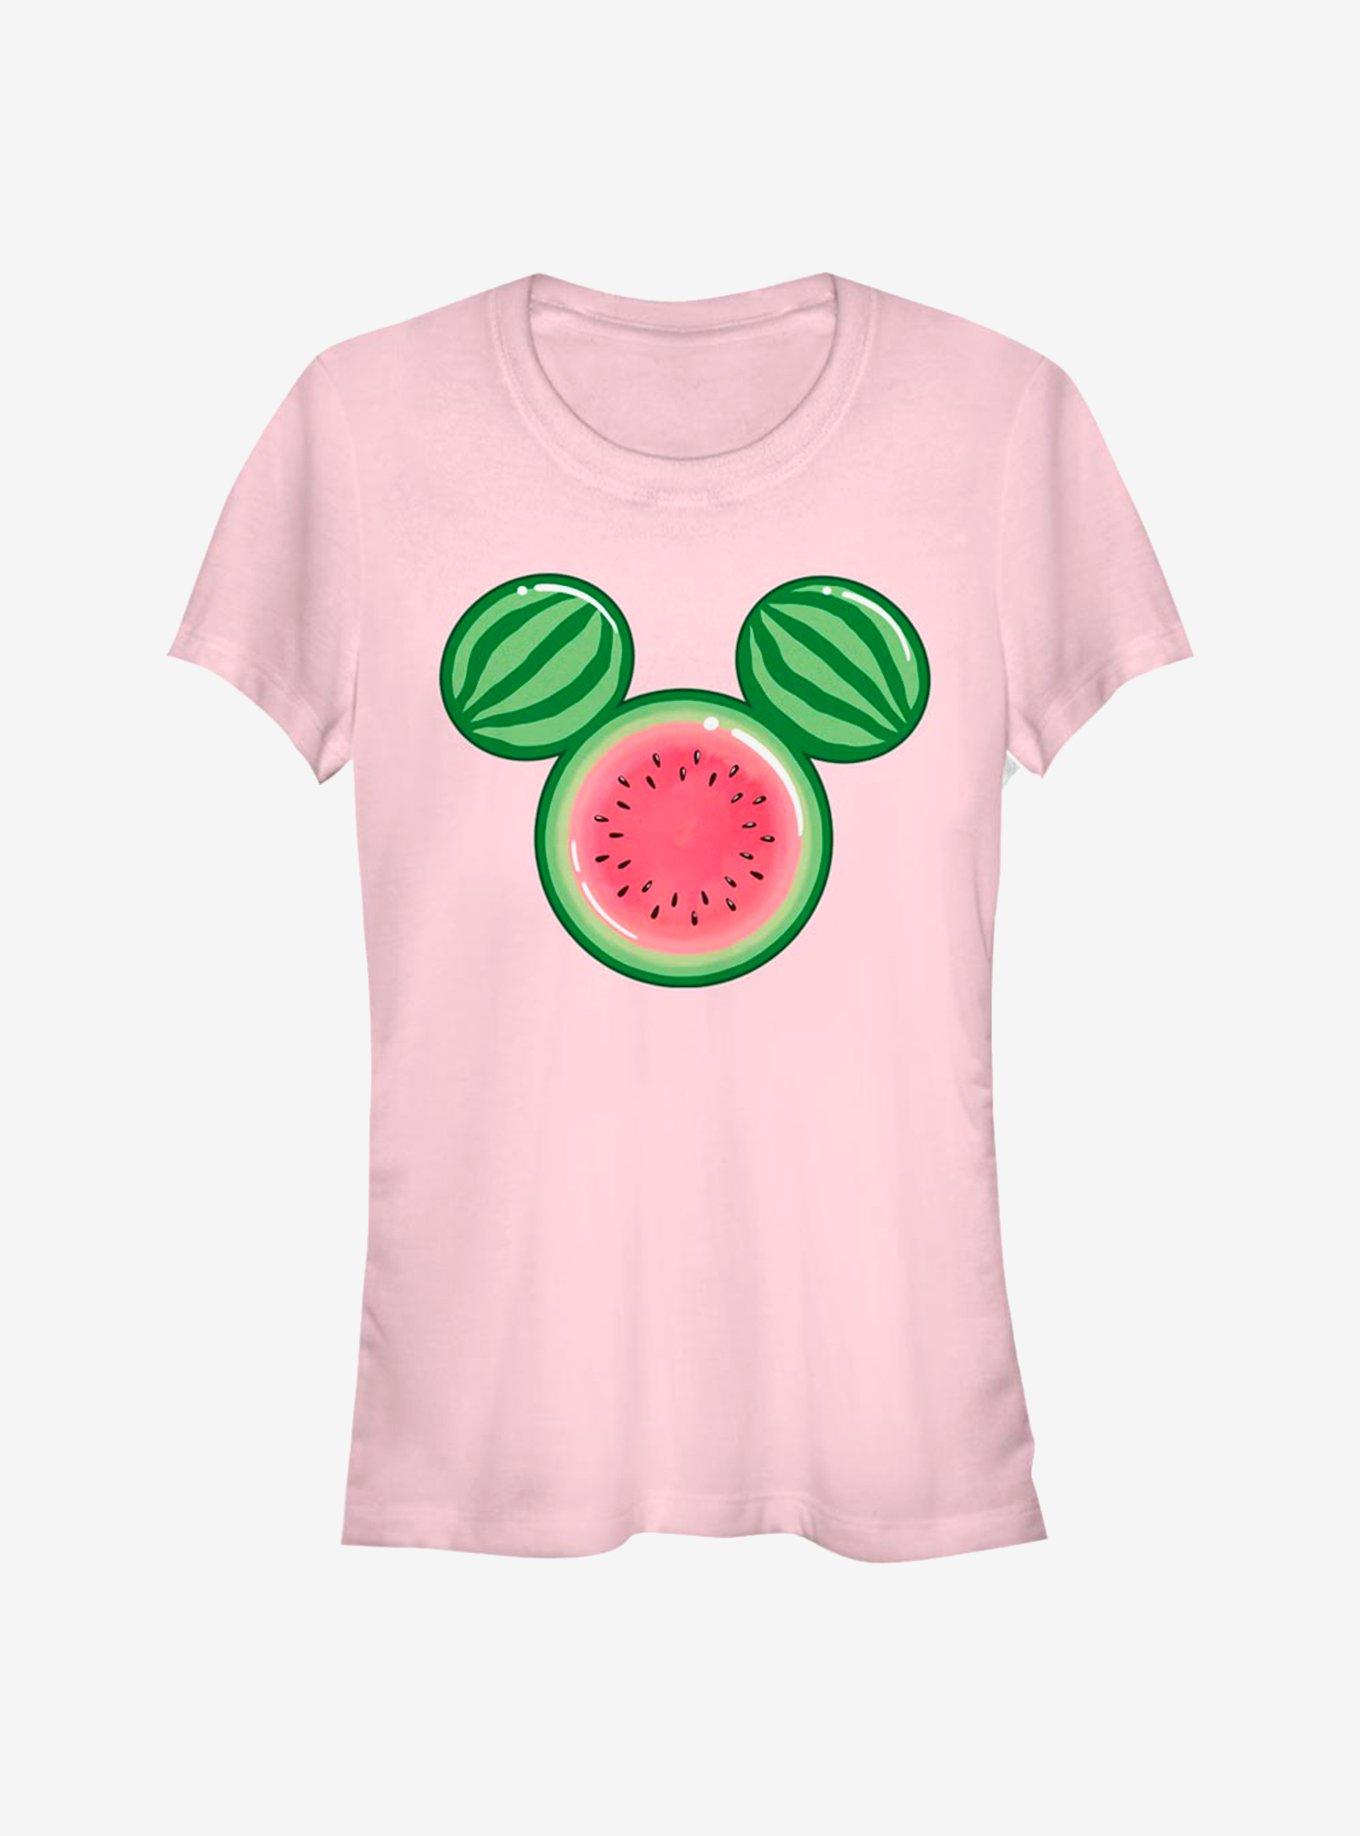 Disney Mickey Mouse Watermelon Ears Girls T-Shirt, LIGHT PINK, hi-res